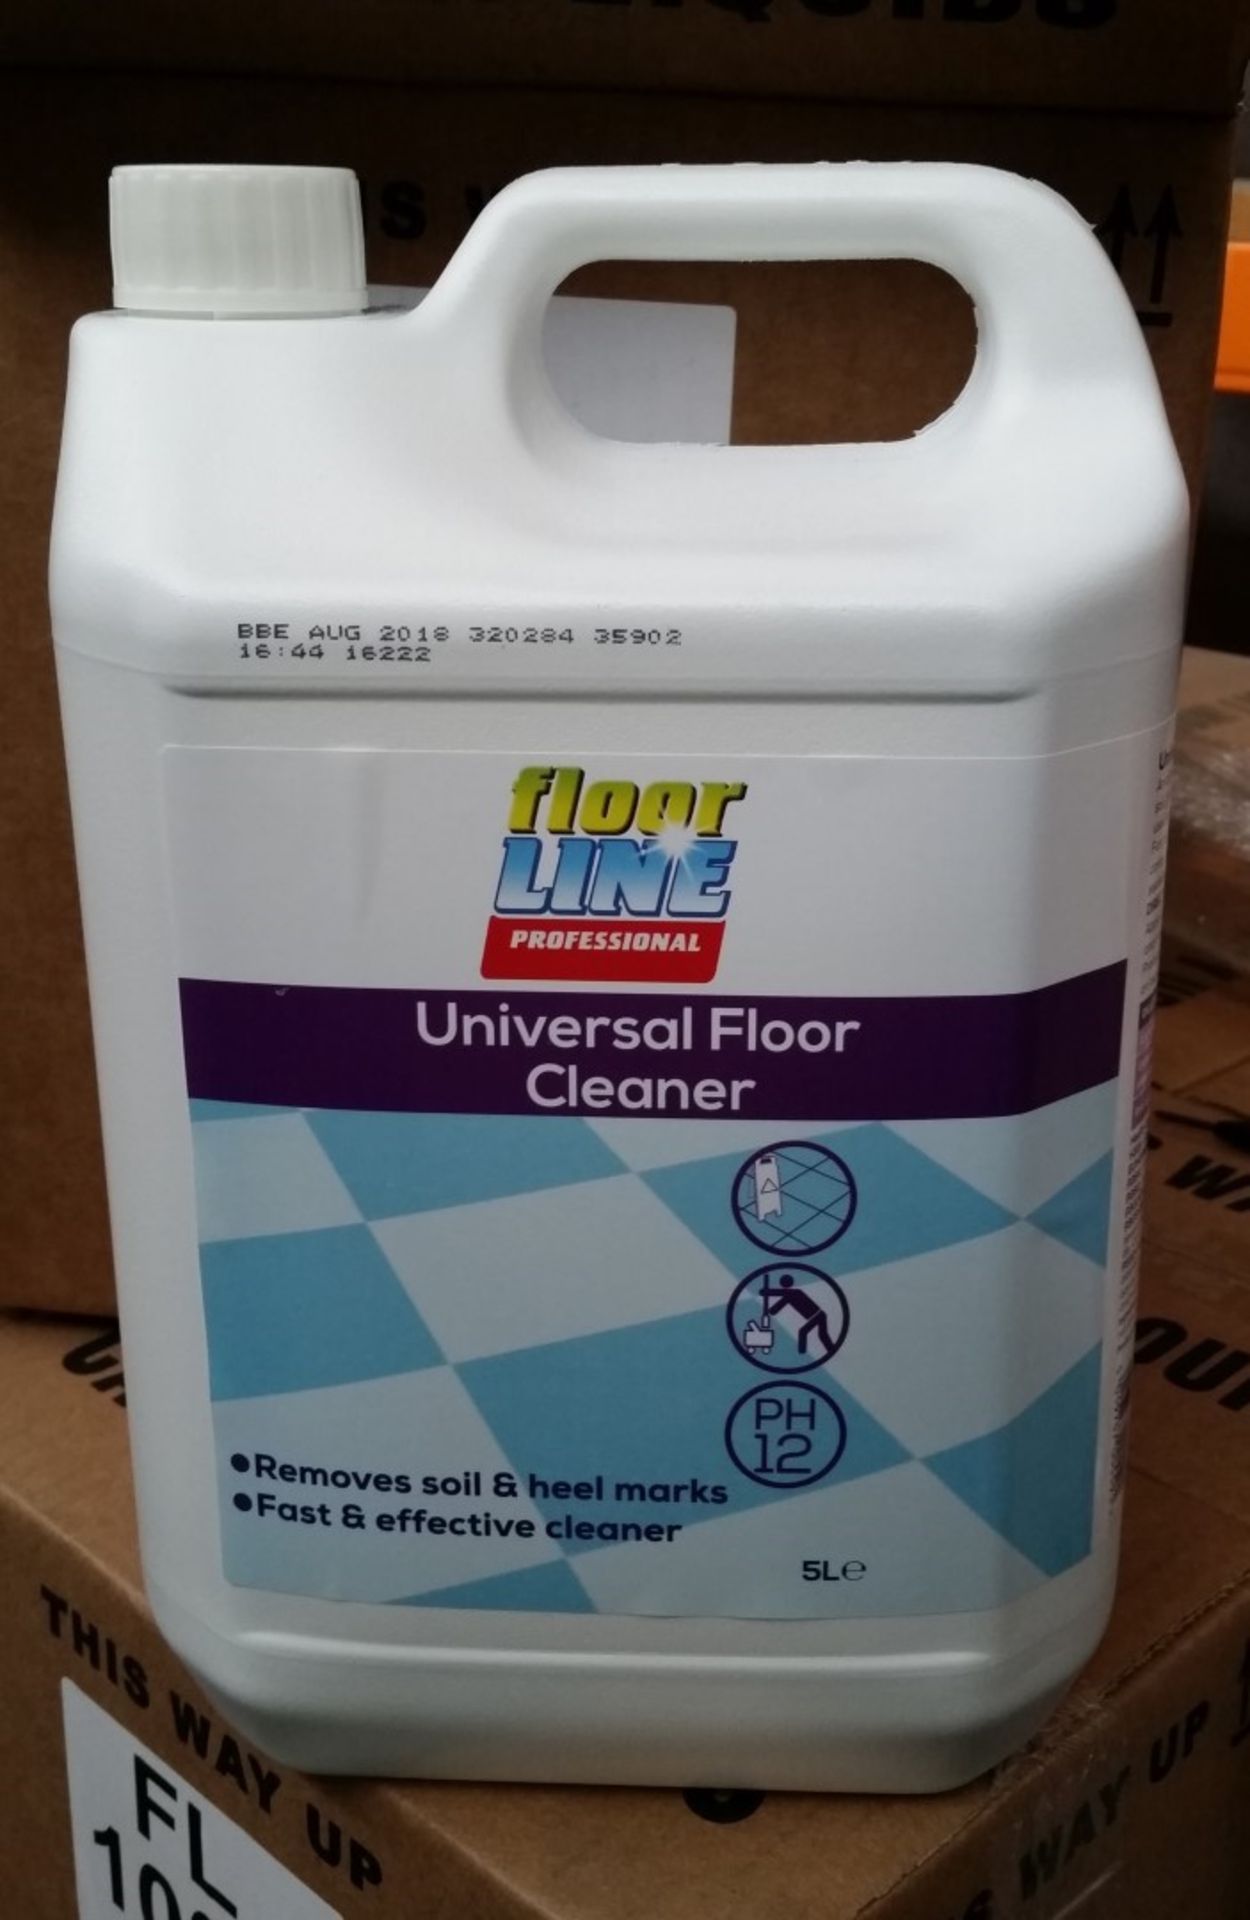 2 x Floor Line Professional 5 Litre Universal Floor Cleaner - Removes Soil & Heel Marks - Fast & - Image 3 of 7